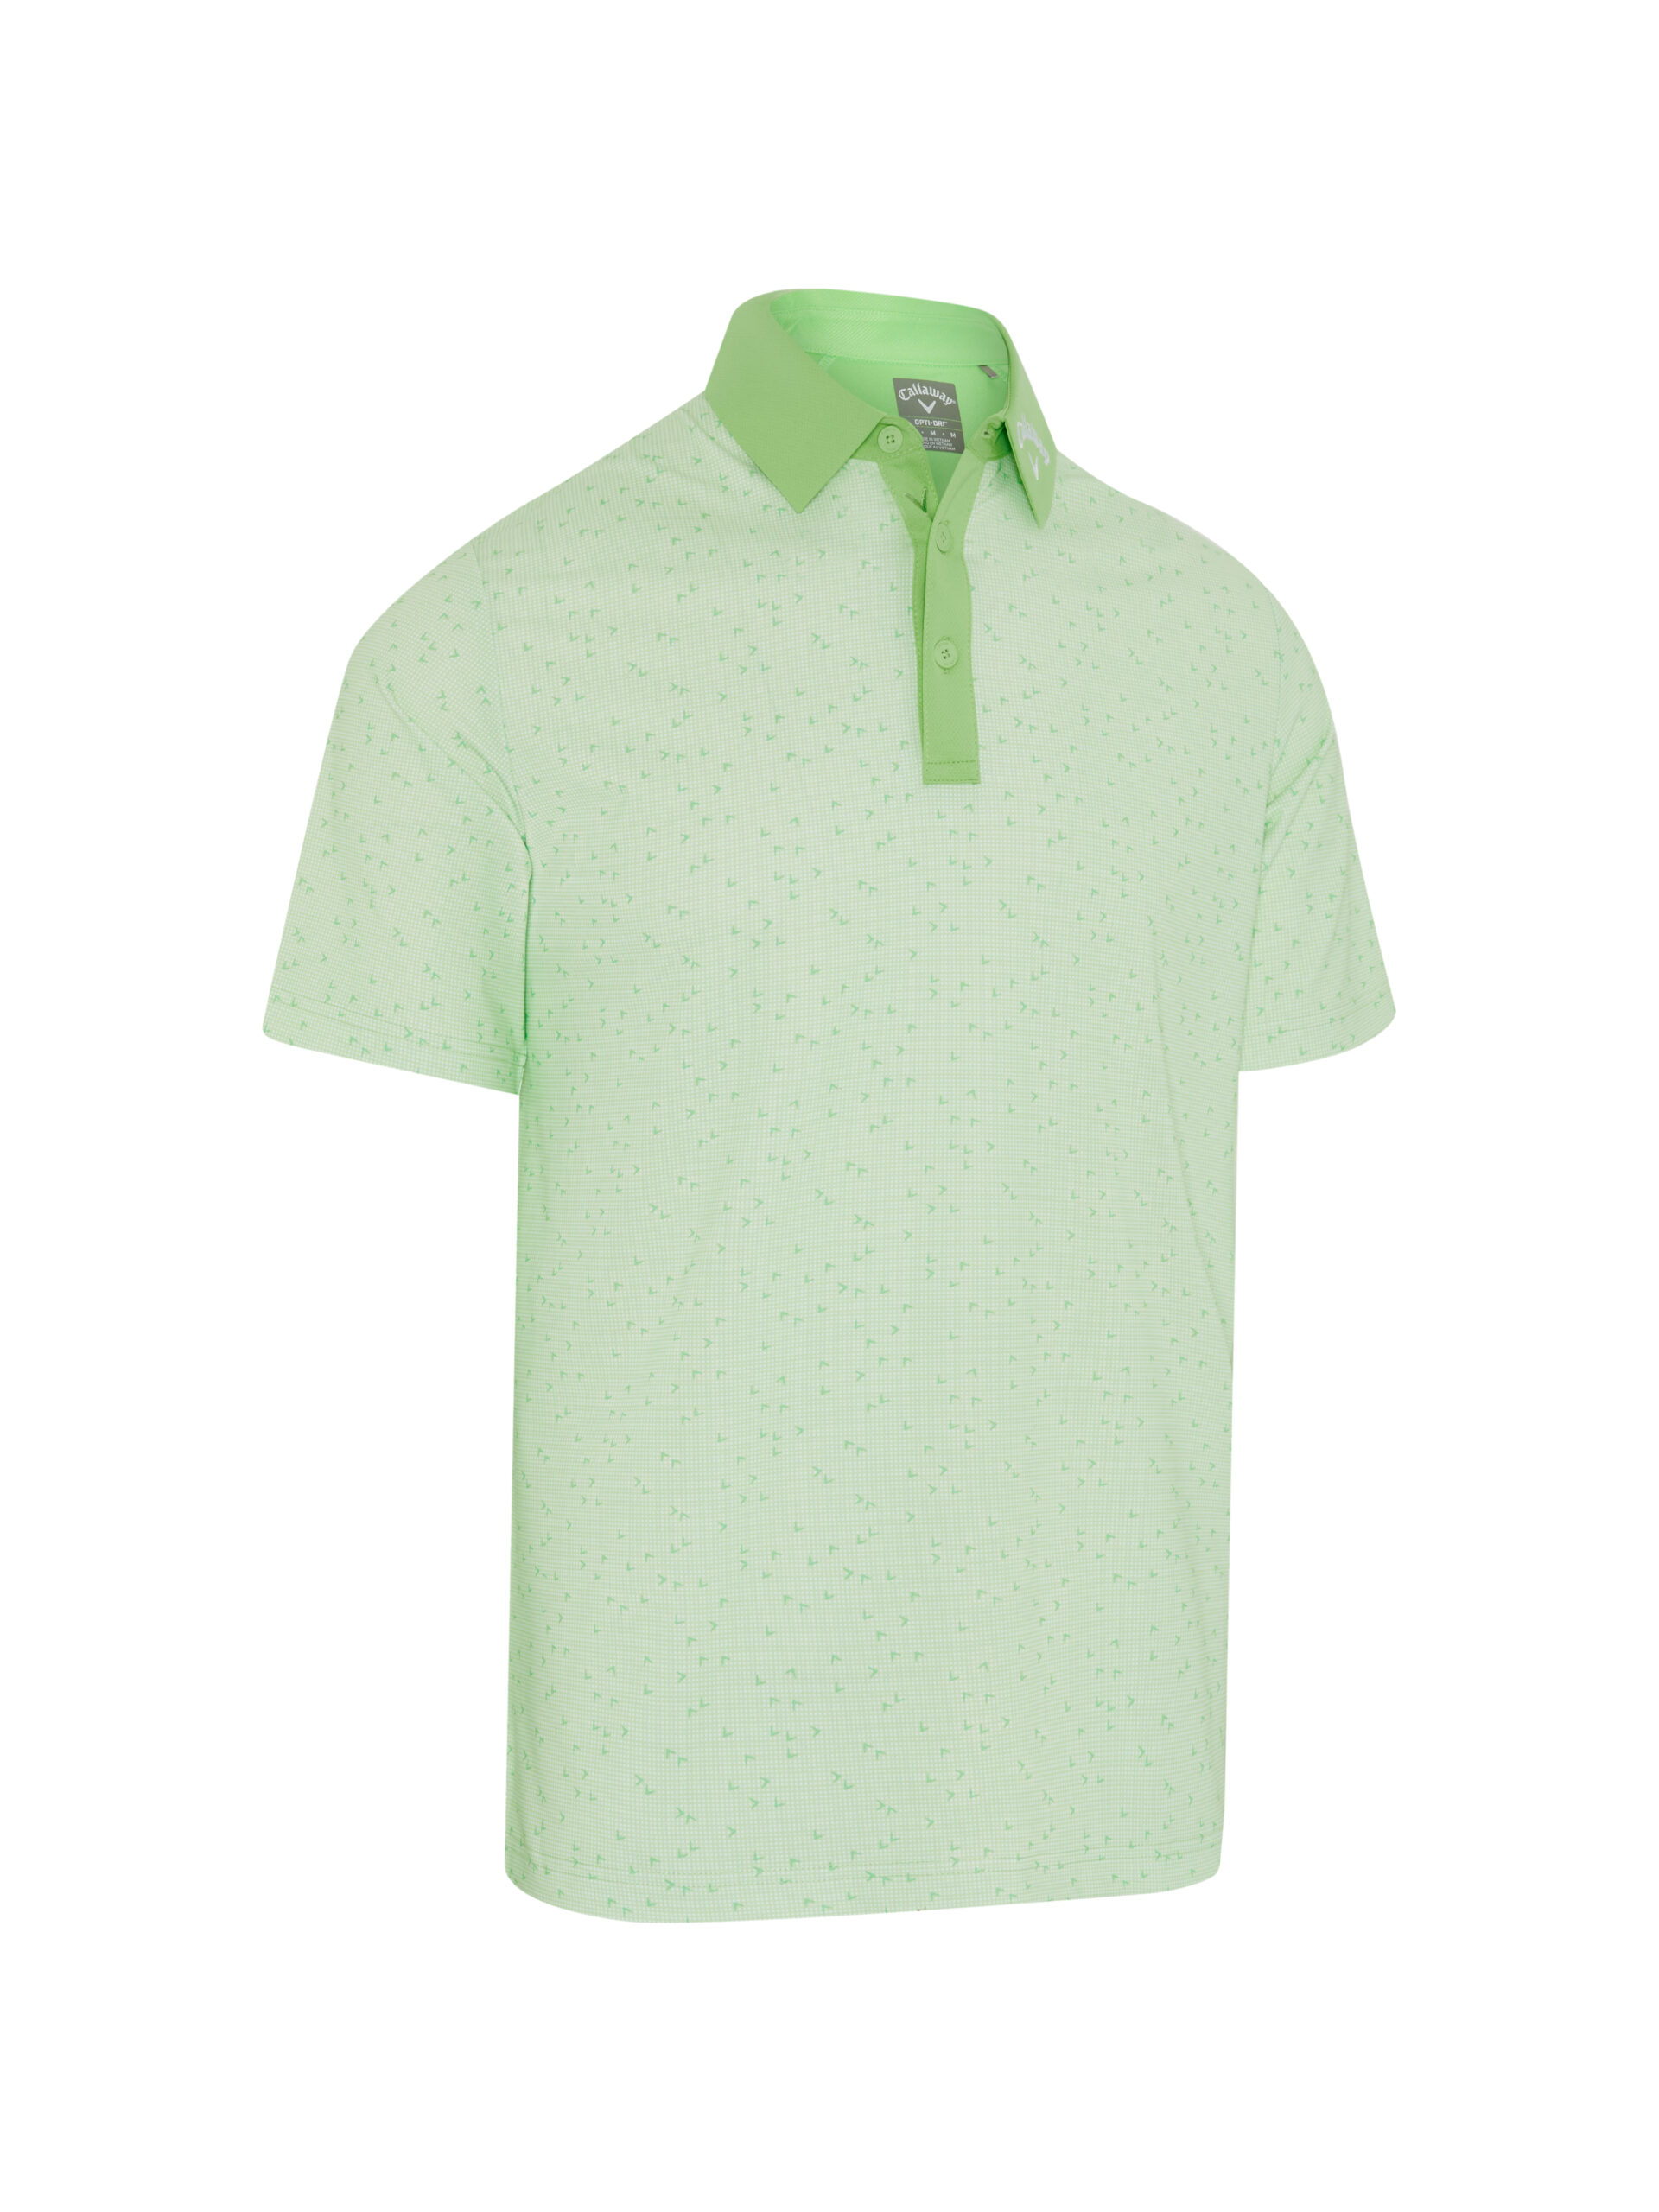 Callaway Trademark All Over Chev pánské golfové triko, světle zelené, vel. M